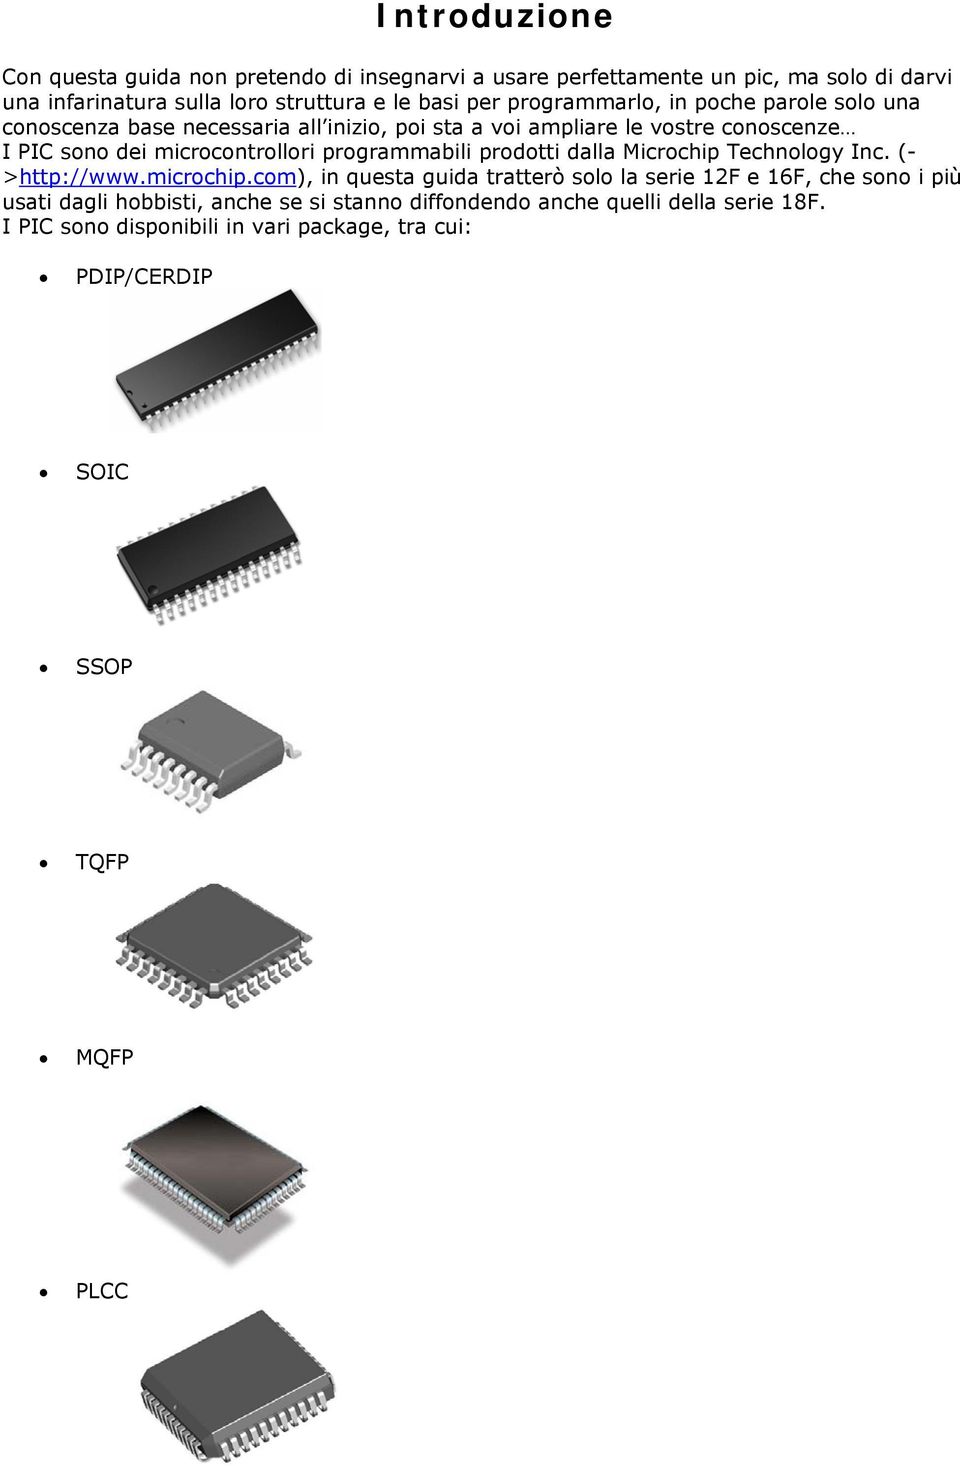 programmabili prodotti dalla Microchip Technology Inc. (- >http://www.microchip.